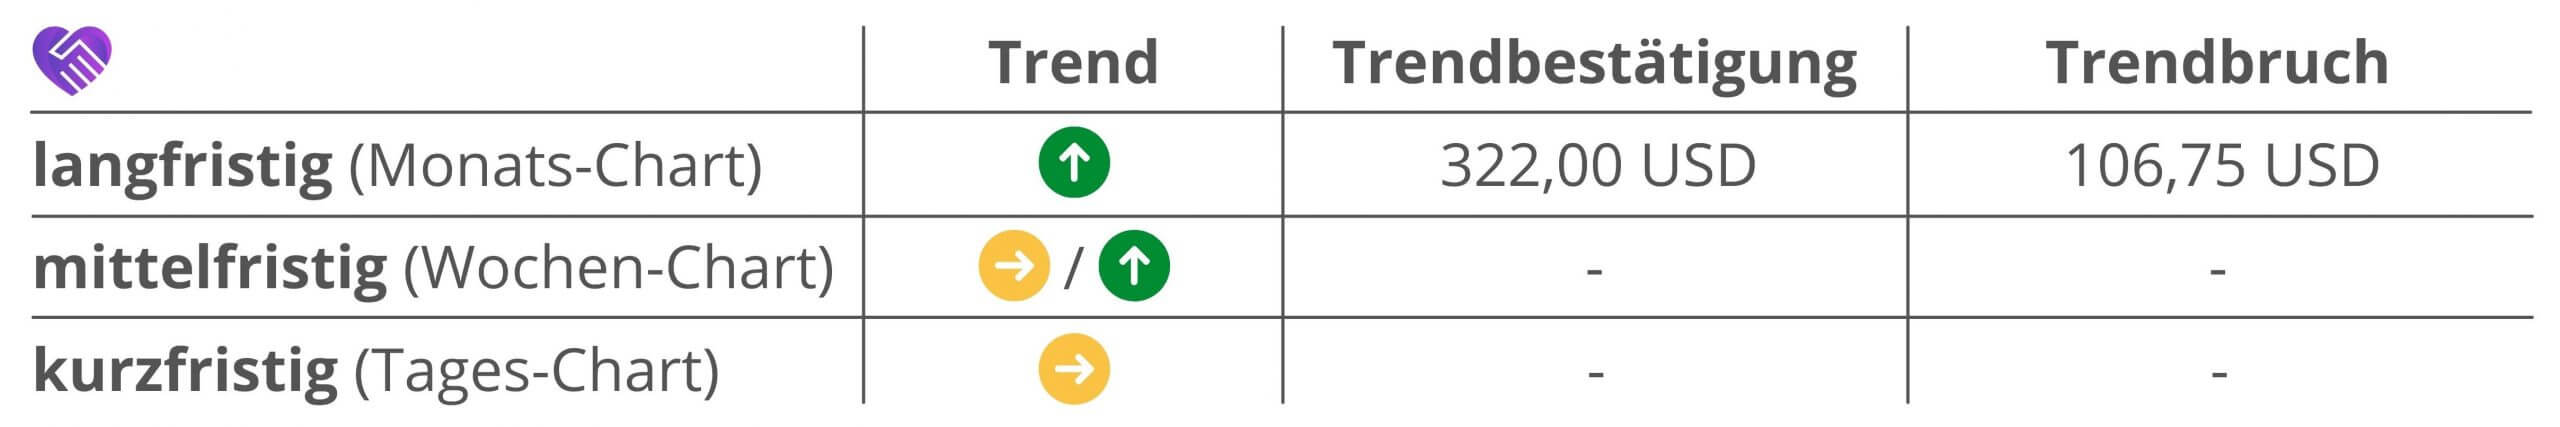 Fortinet Aktie Analyse Trends